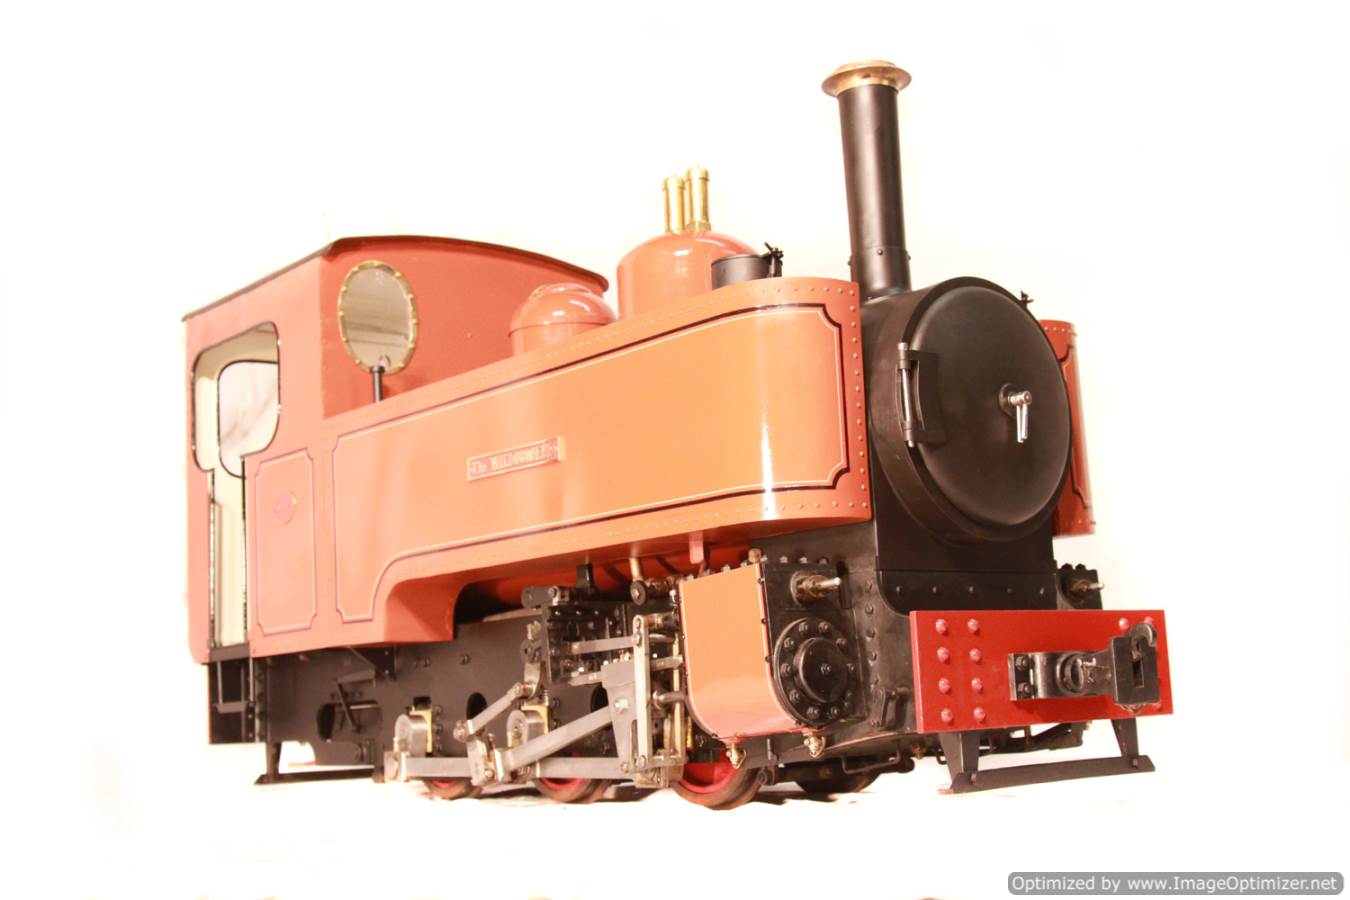 test 5 inch Gauge Fowler Live Steam Locomotive for sale 04 Optimized